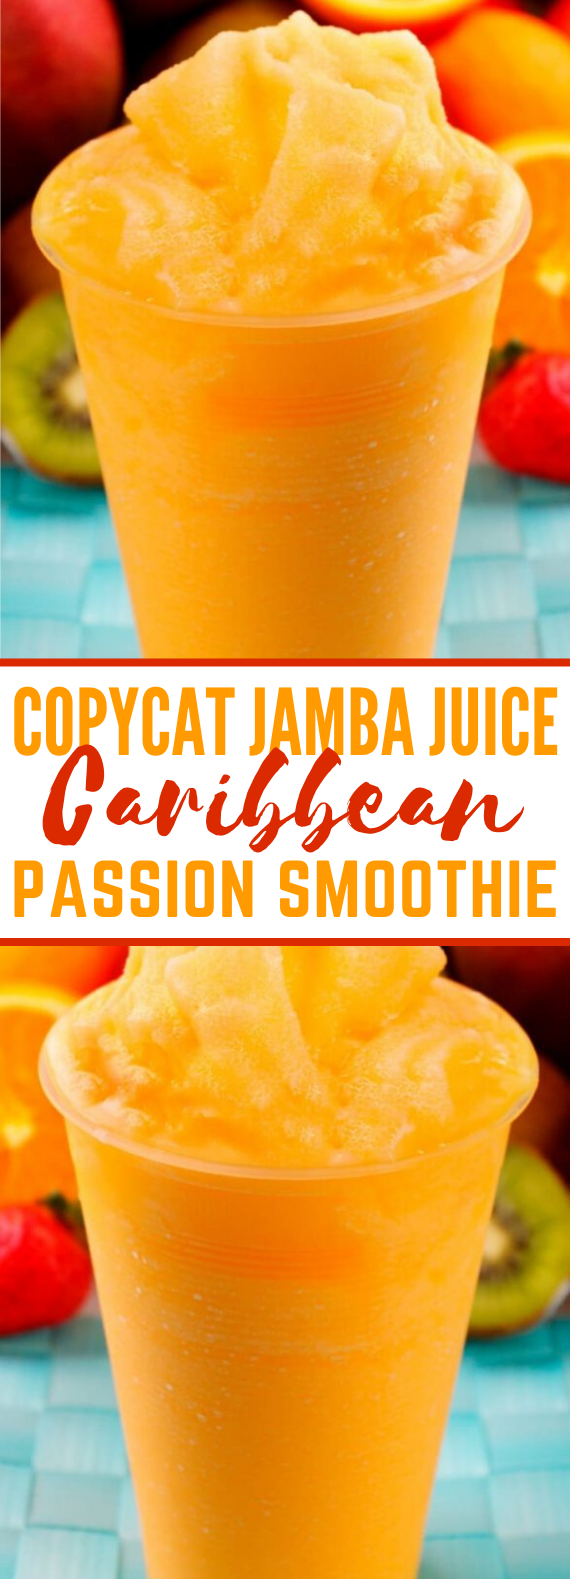 COPYCAT JAMBA JUICE CARIBBEAN PASSION SMOOTHIE #drinks #healthy